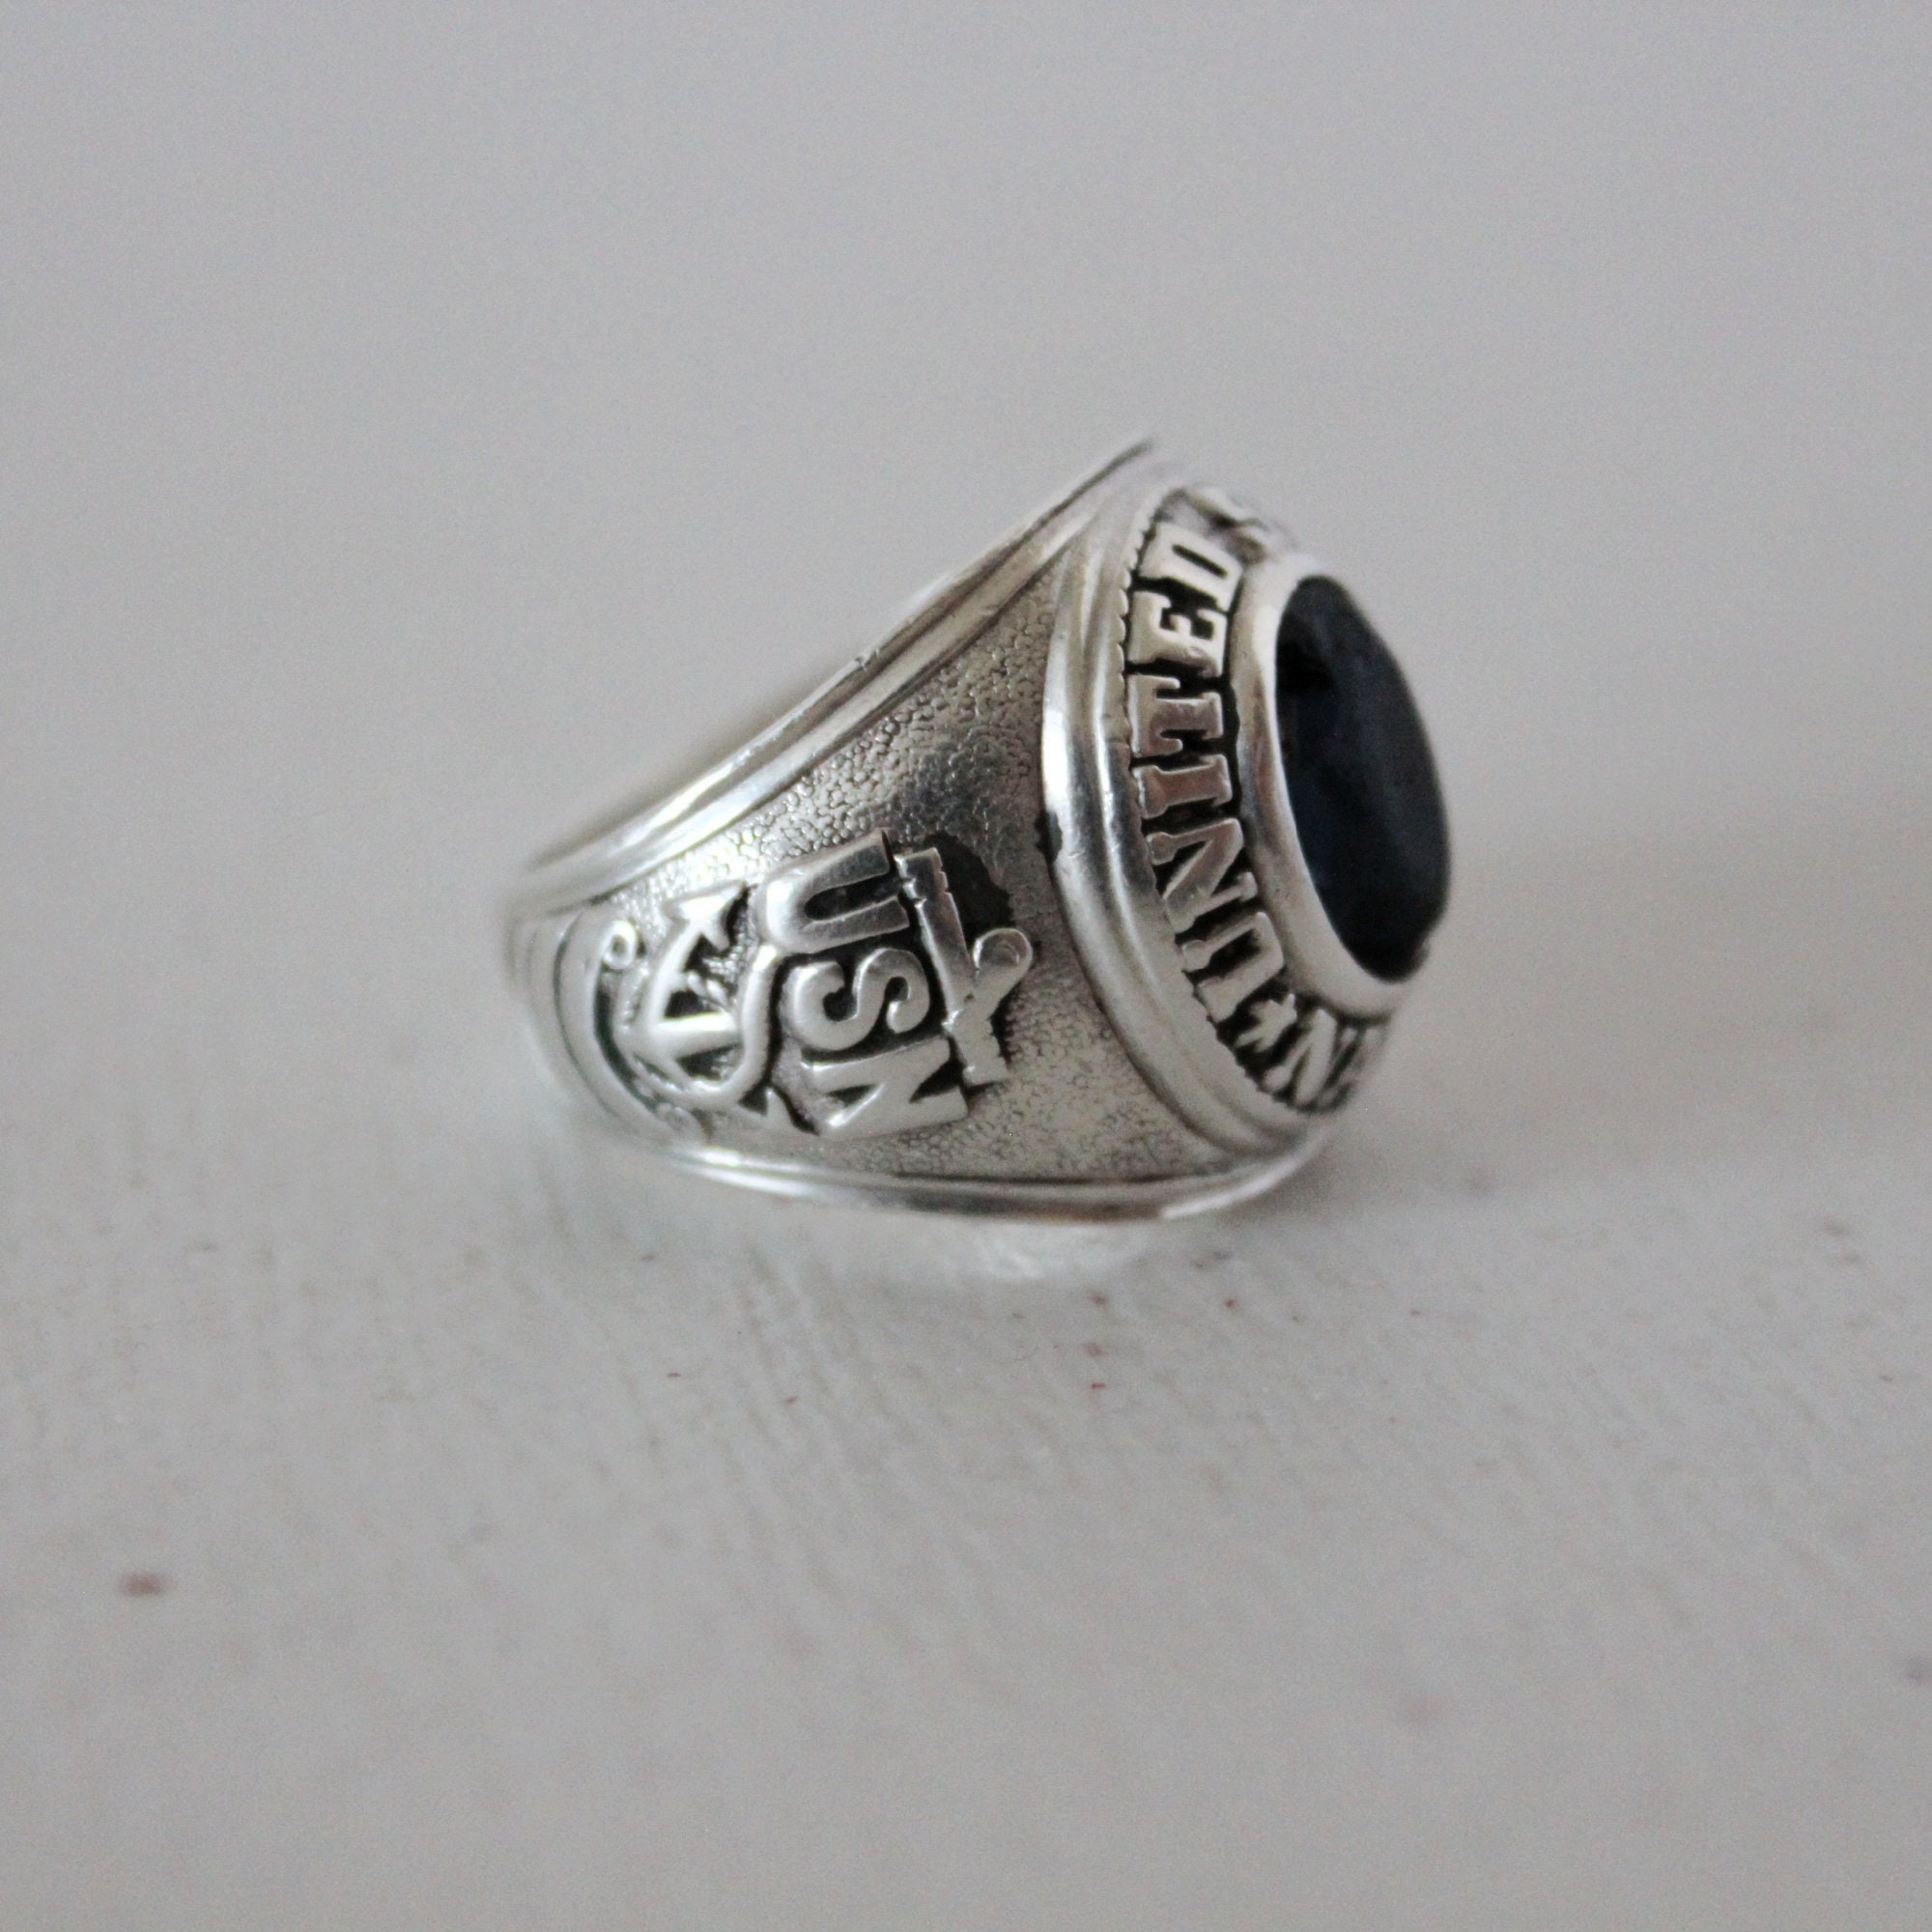 USNI Sterling Silver Insignia Key Ring at M.LaHart & Co.